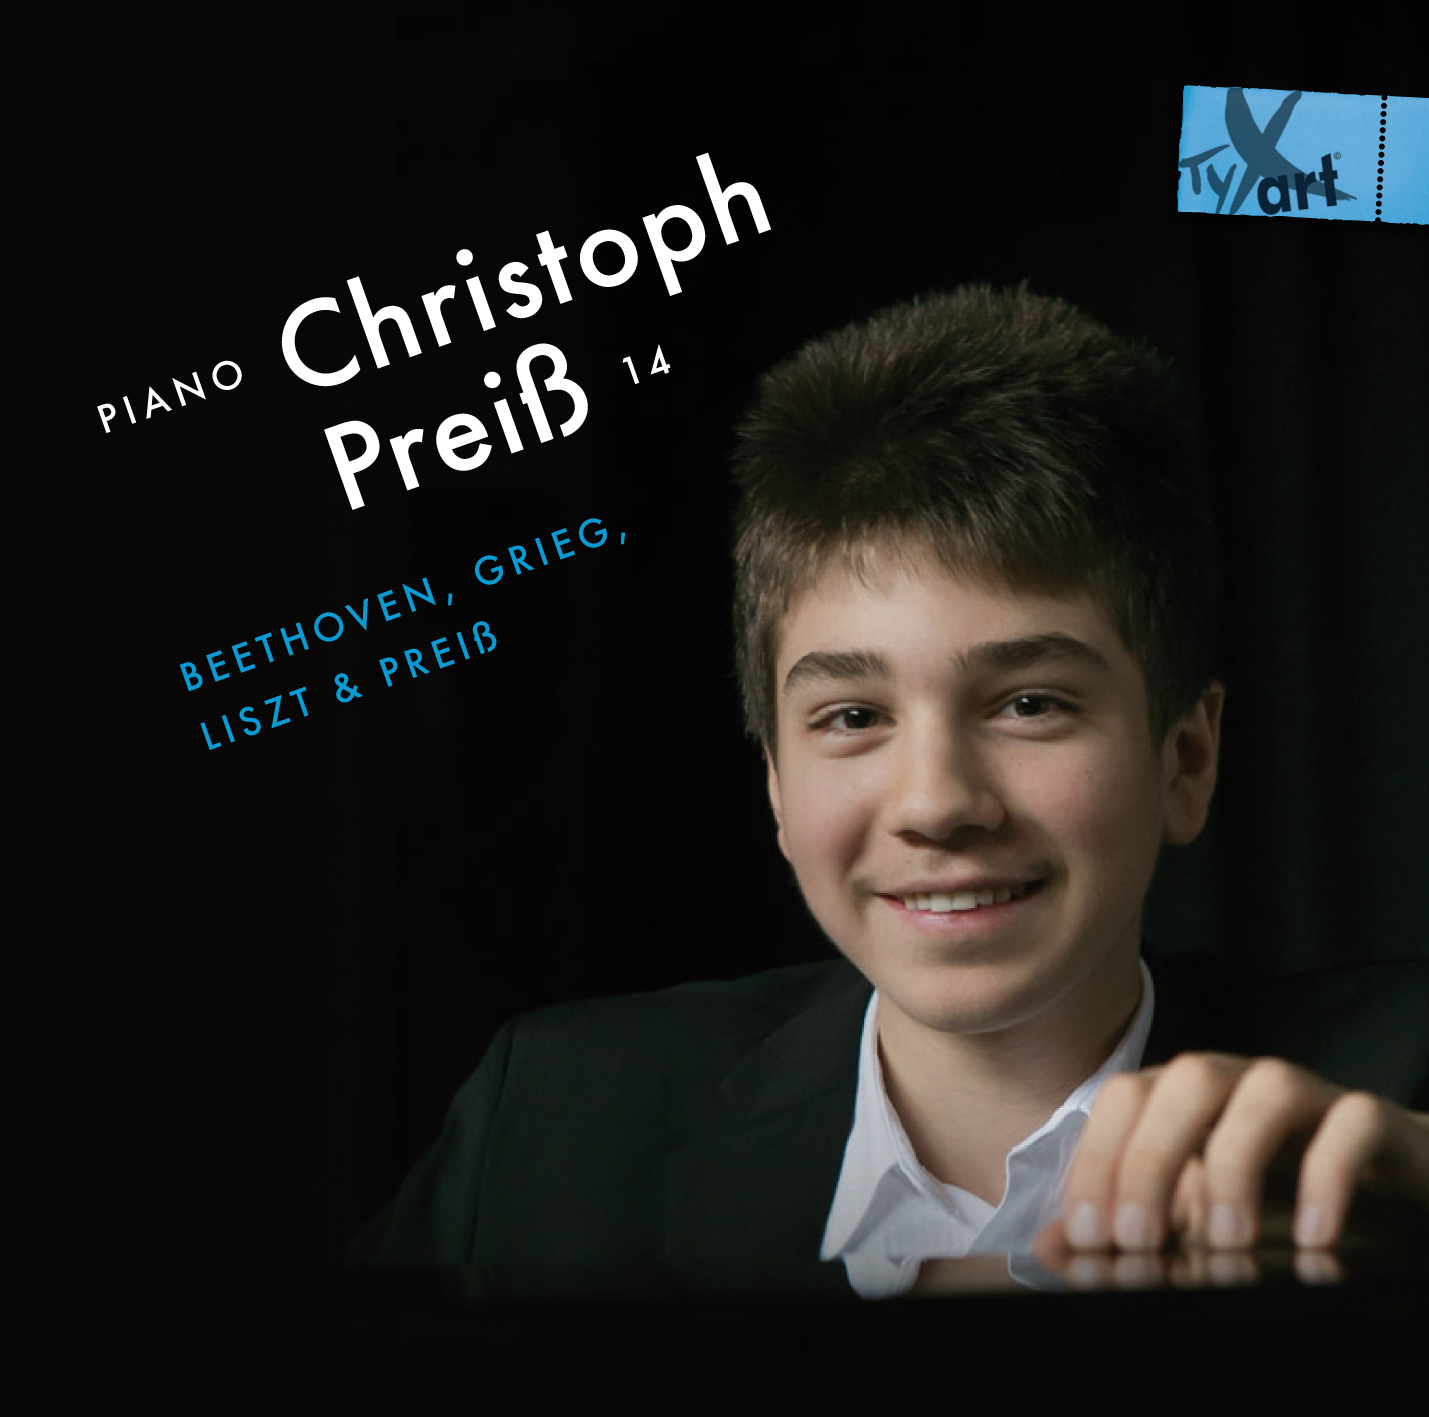 Christoph Preiss, 14, Piano